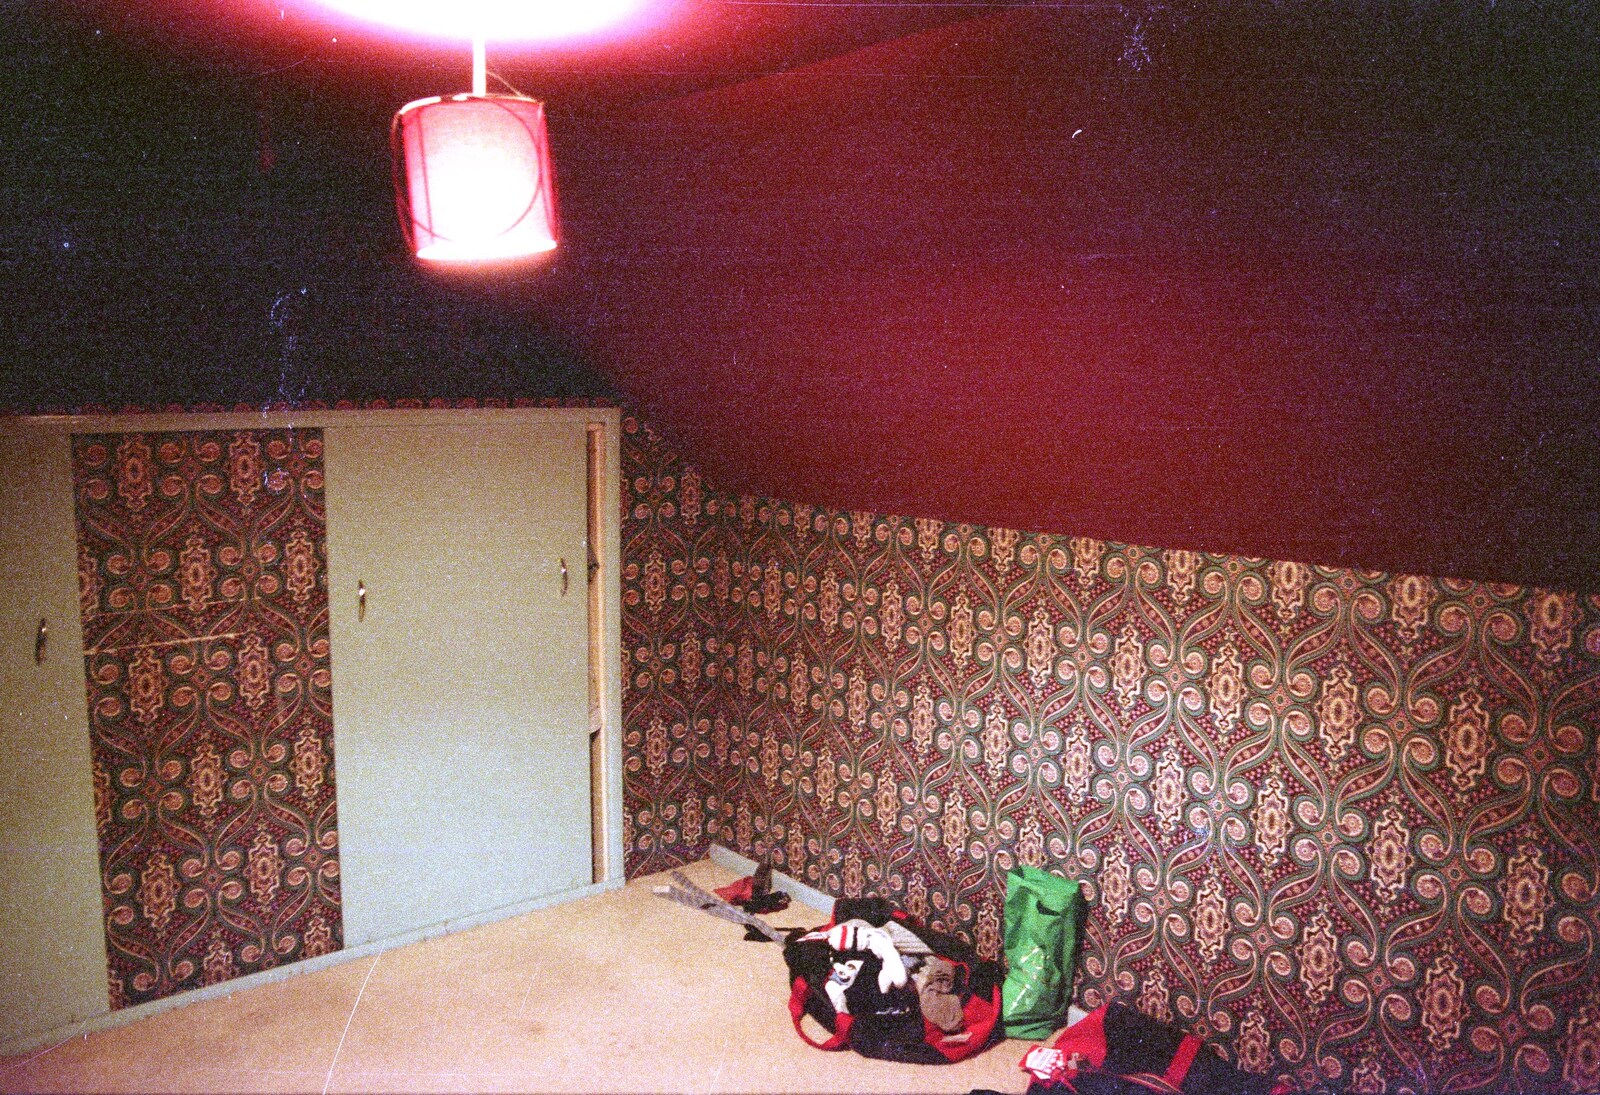 The attic room from Bracken Way, Walkford, Dorset - 15th September 1986